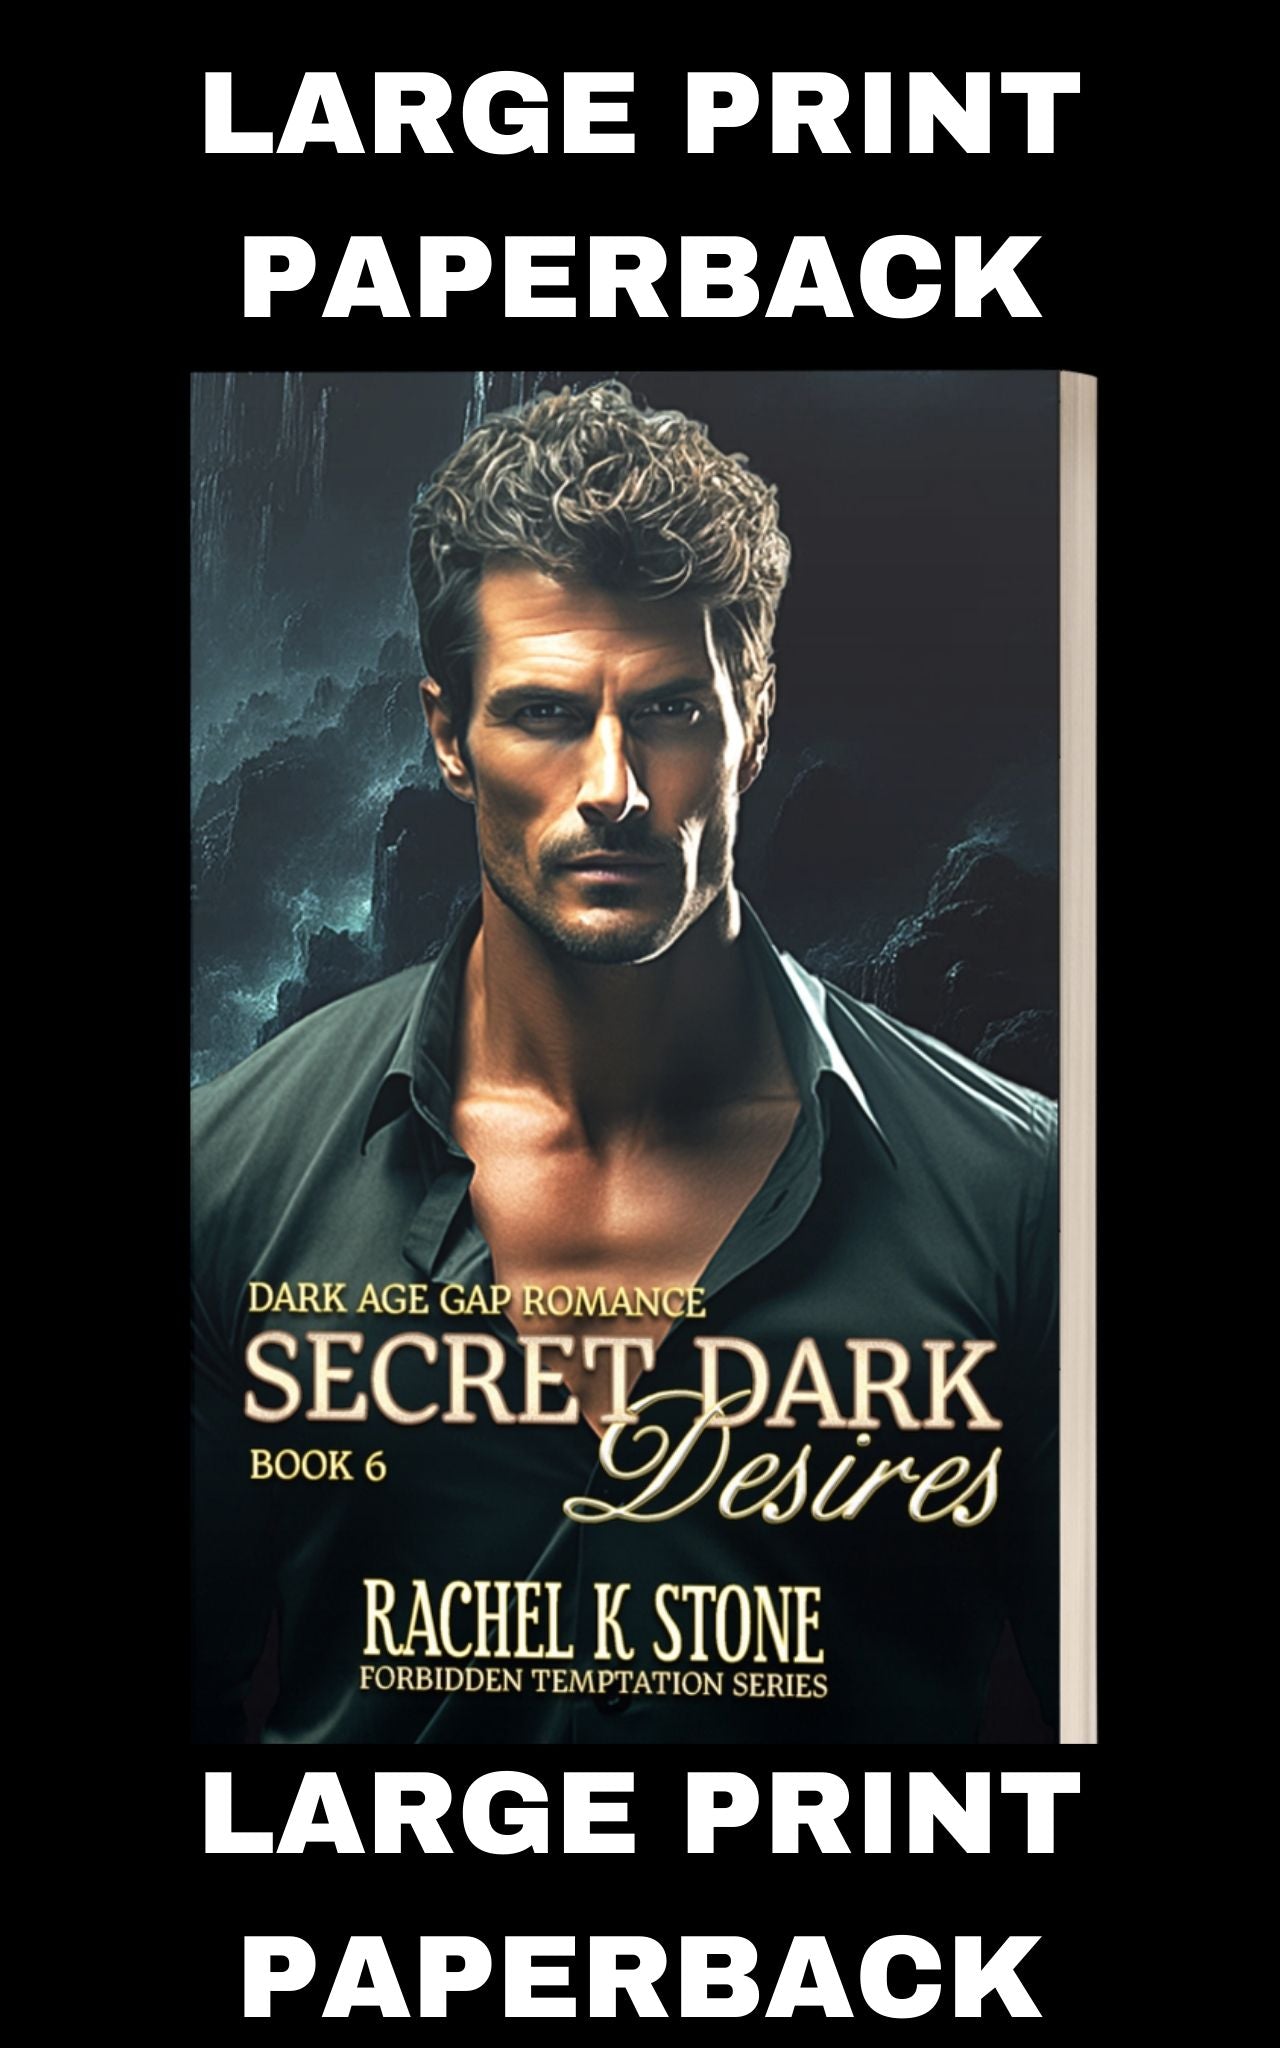  Secret Dark Desires: Age Gap Romance (Secrets Series, Book 6 - Large Print Paperback)